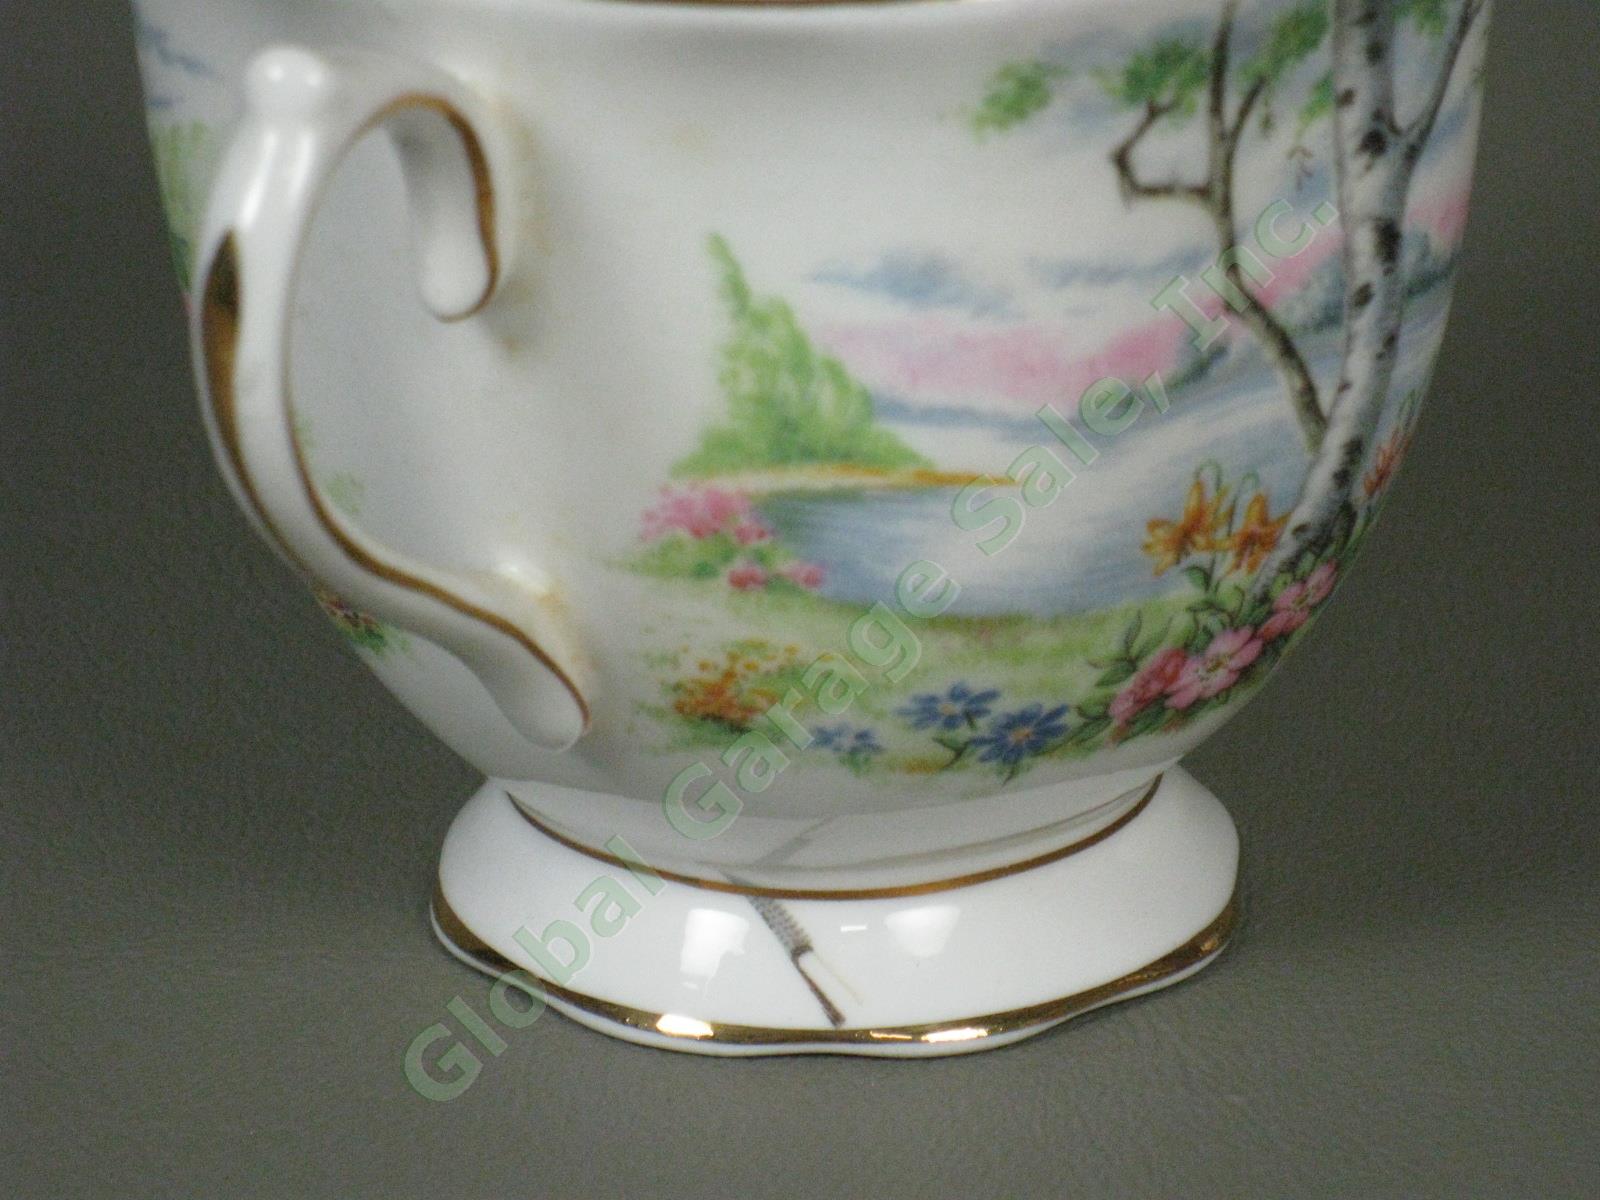 8 Vintage Royal Albert Silver Birch Bone China Teacups Tea Cups + Saucers Set NR 9